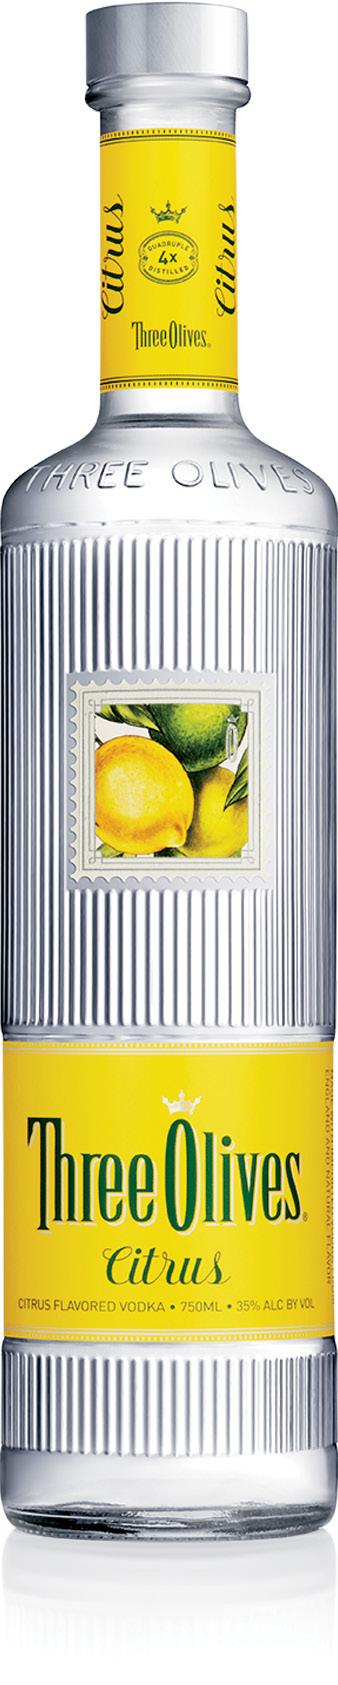 A ZAP TO THE SENSES CITRUS NOSE Balanced lemon-lime aroma, with soft